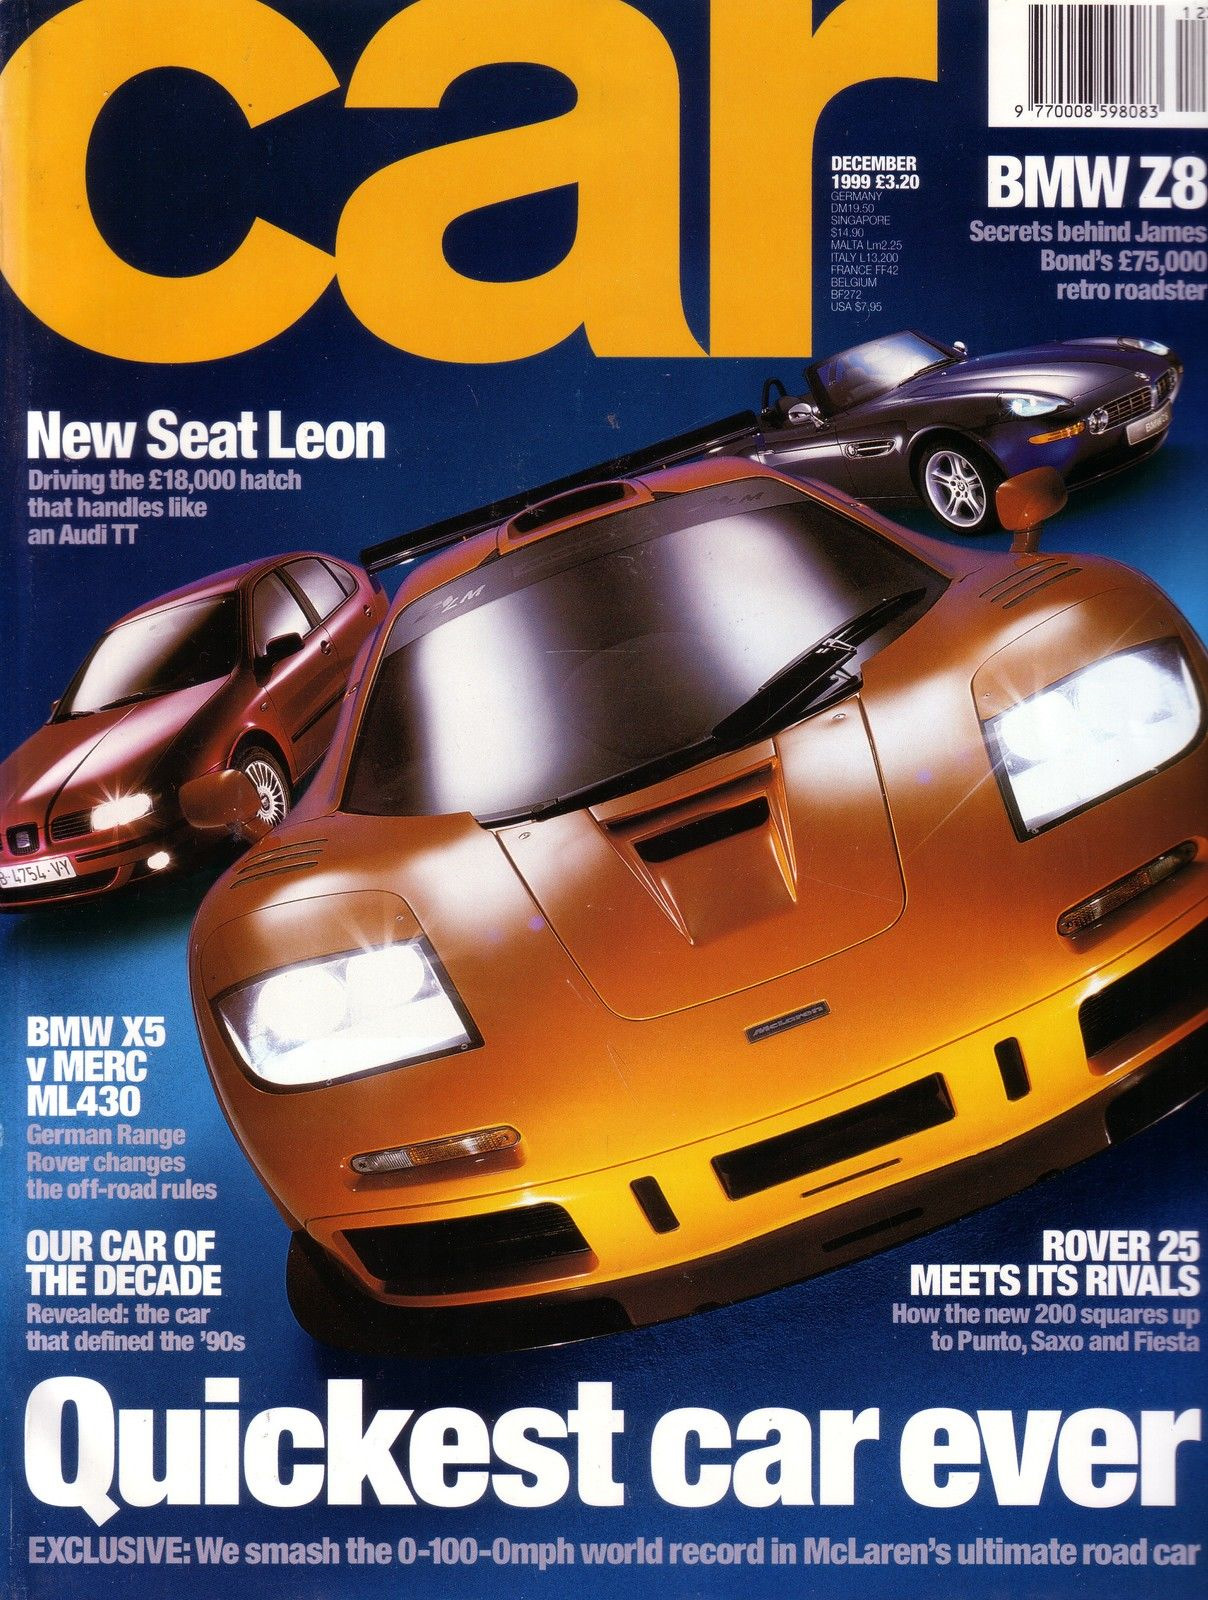 Car magazine. Car Journal. Обложки журнала car Music. Обложки журнала car Music 2006.